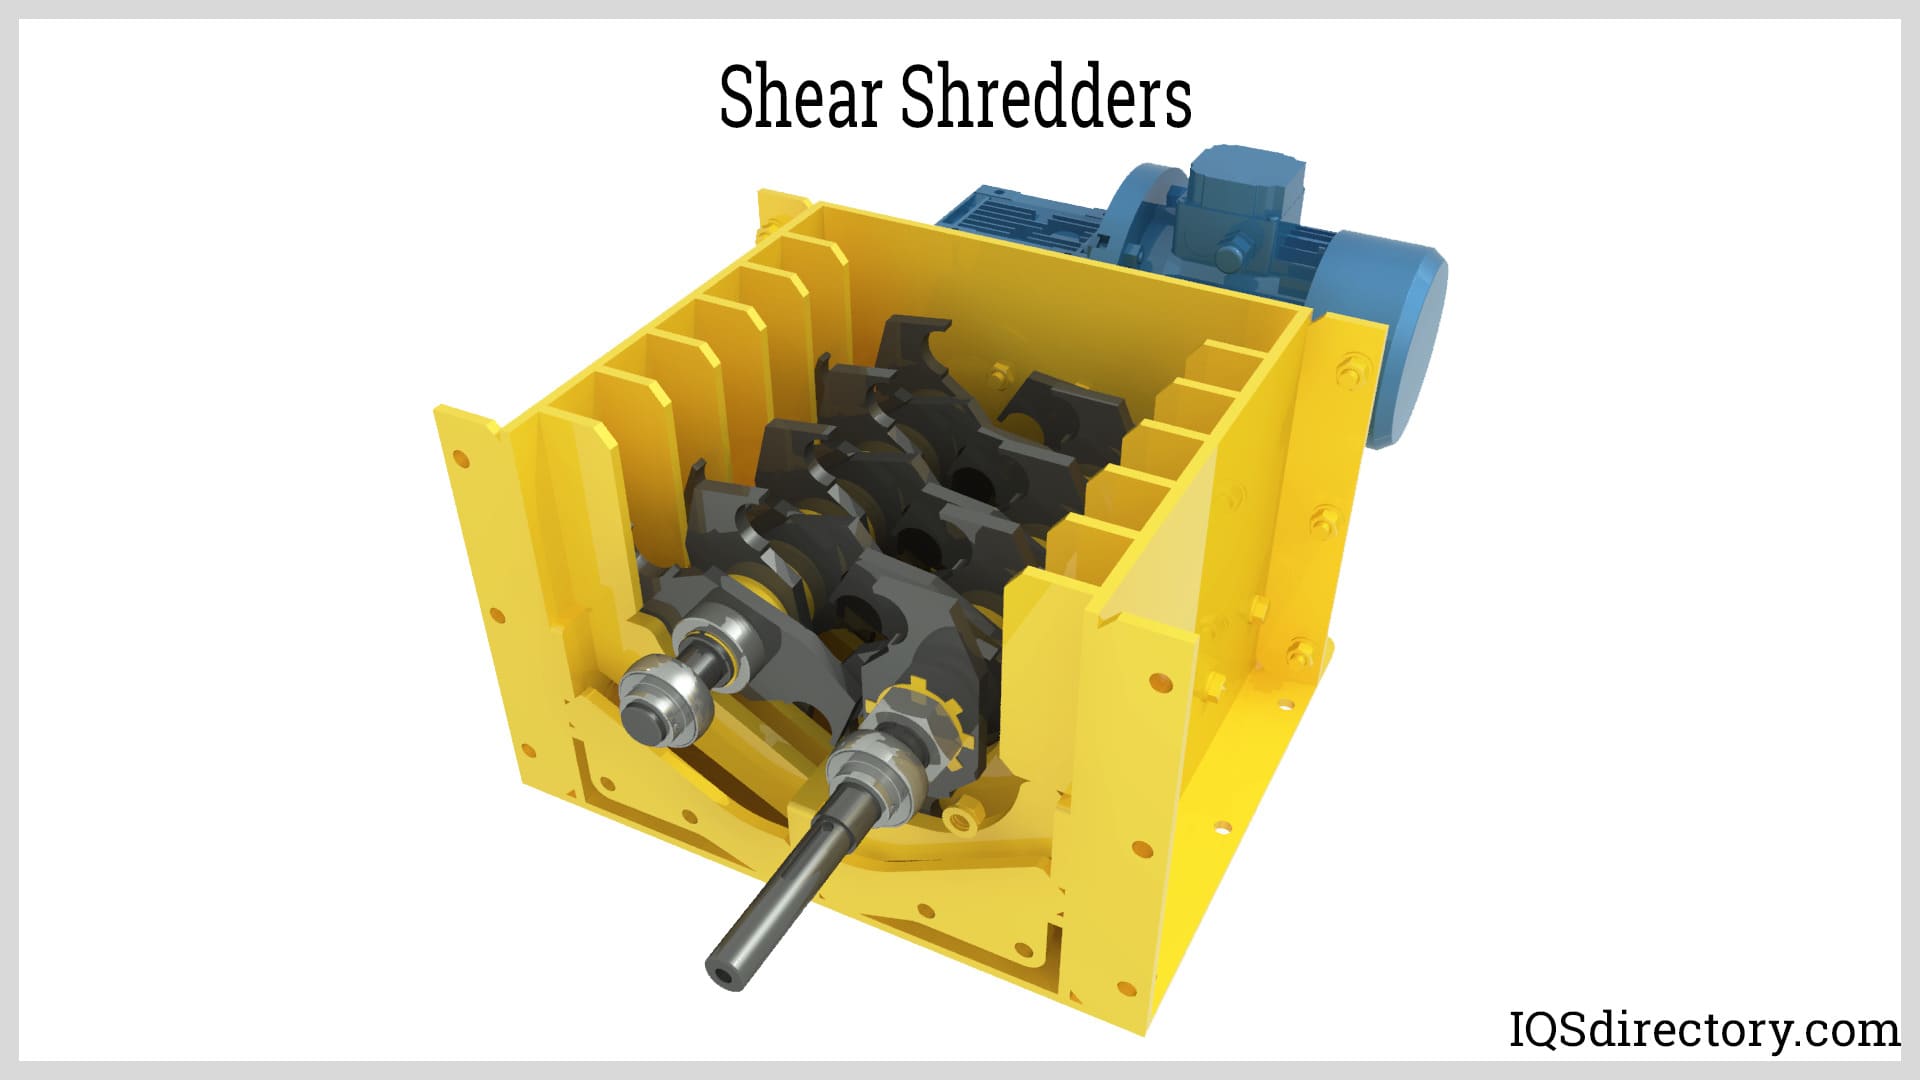 Plastic Shredder Manufacturers